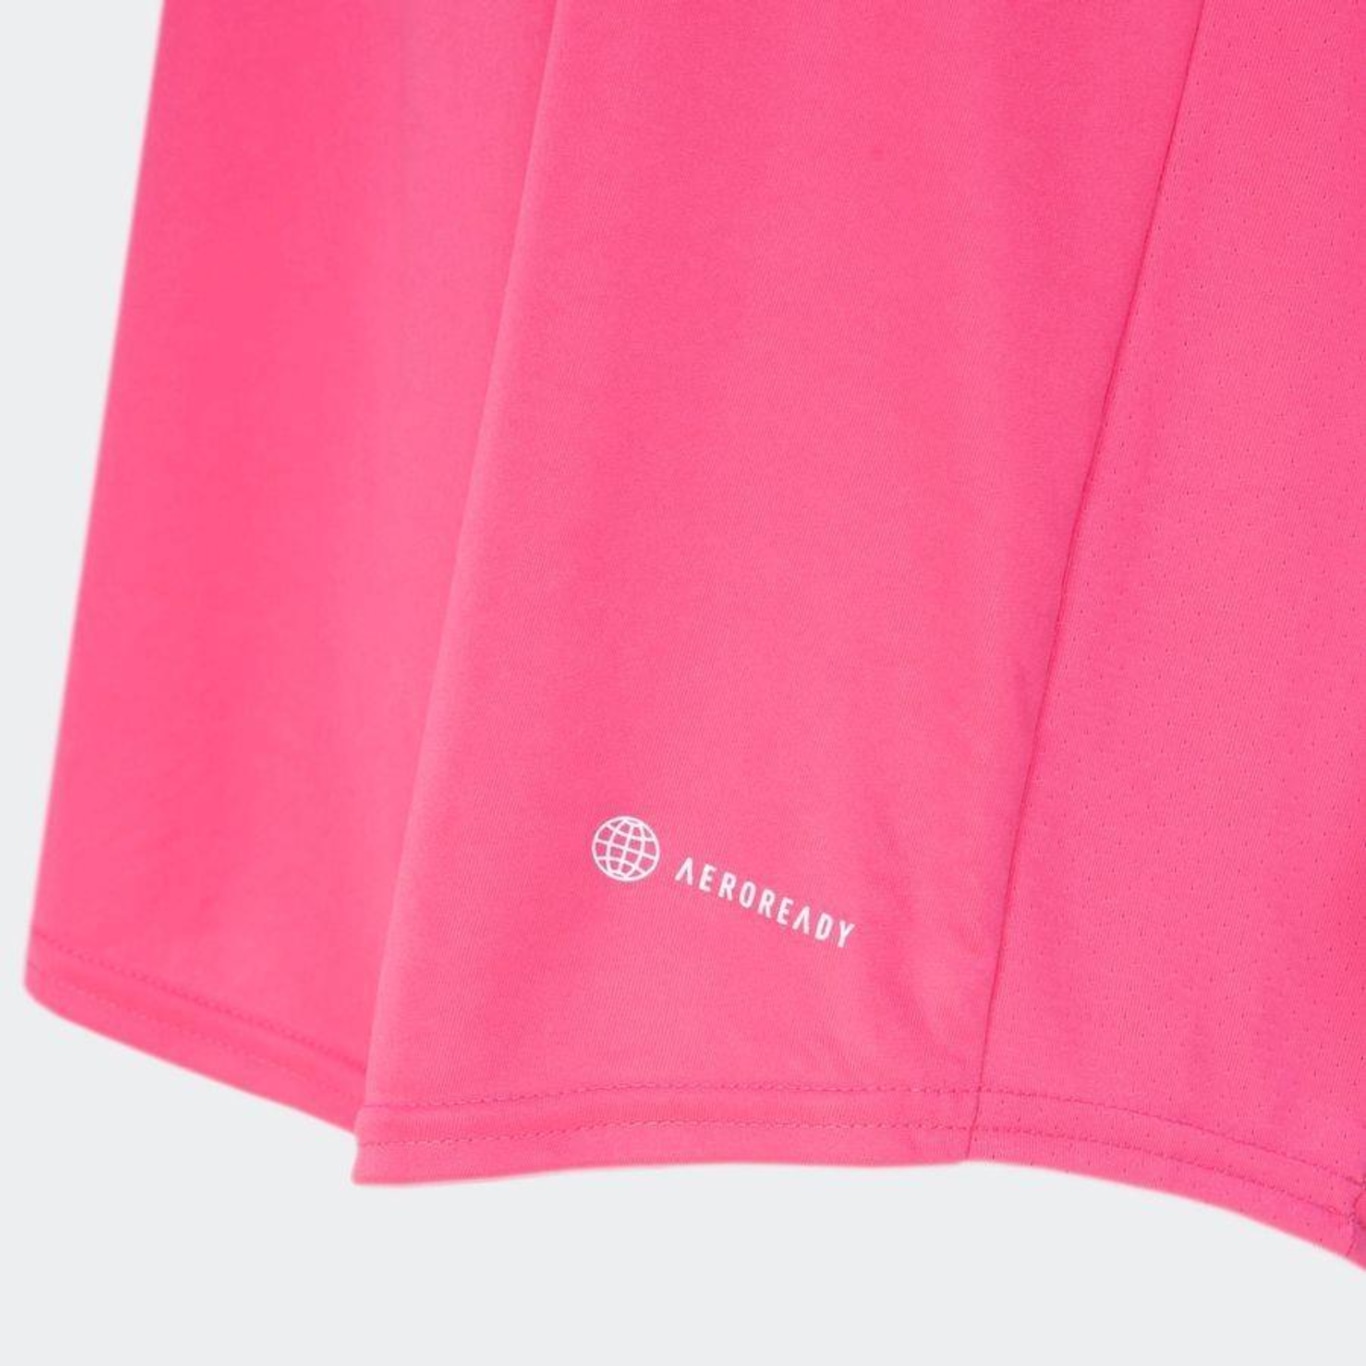 Camisa Adidas Internacional Outubro Rosa 2021 Feminina - FutFanatics